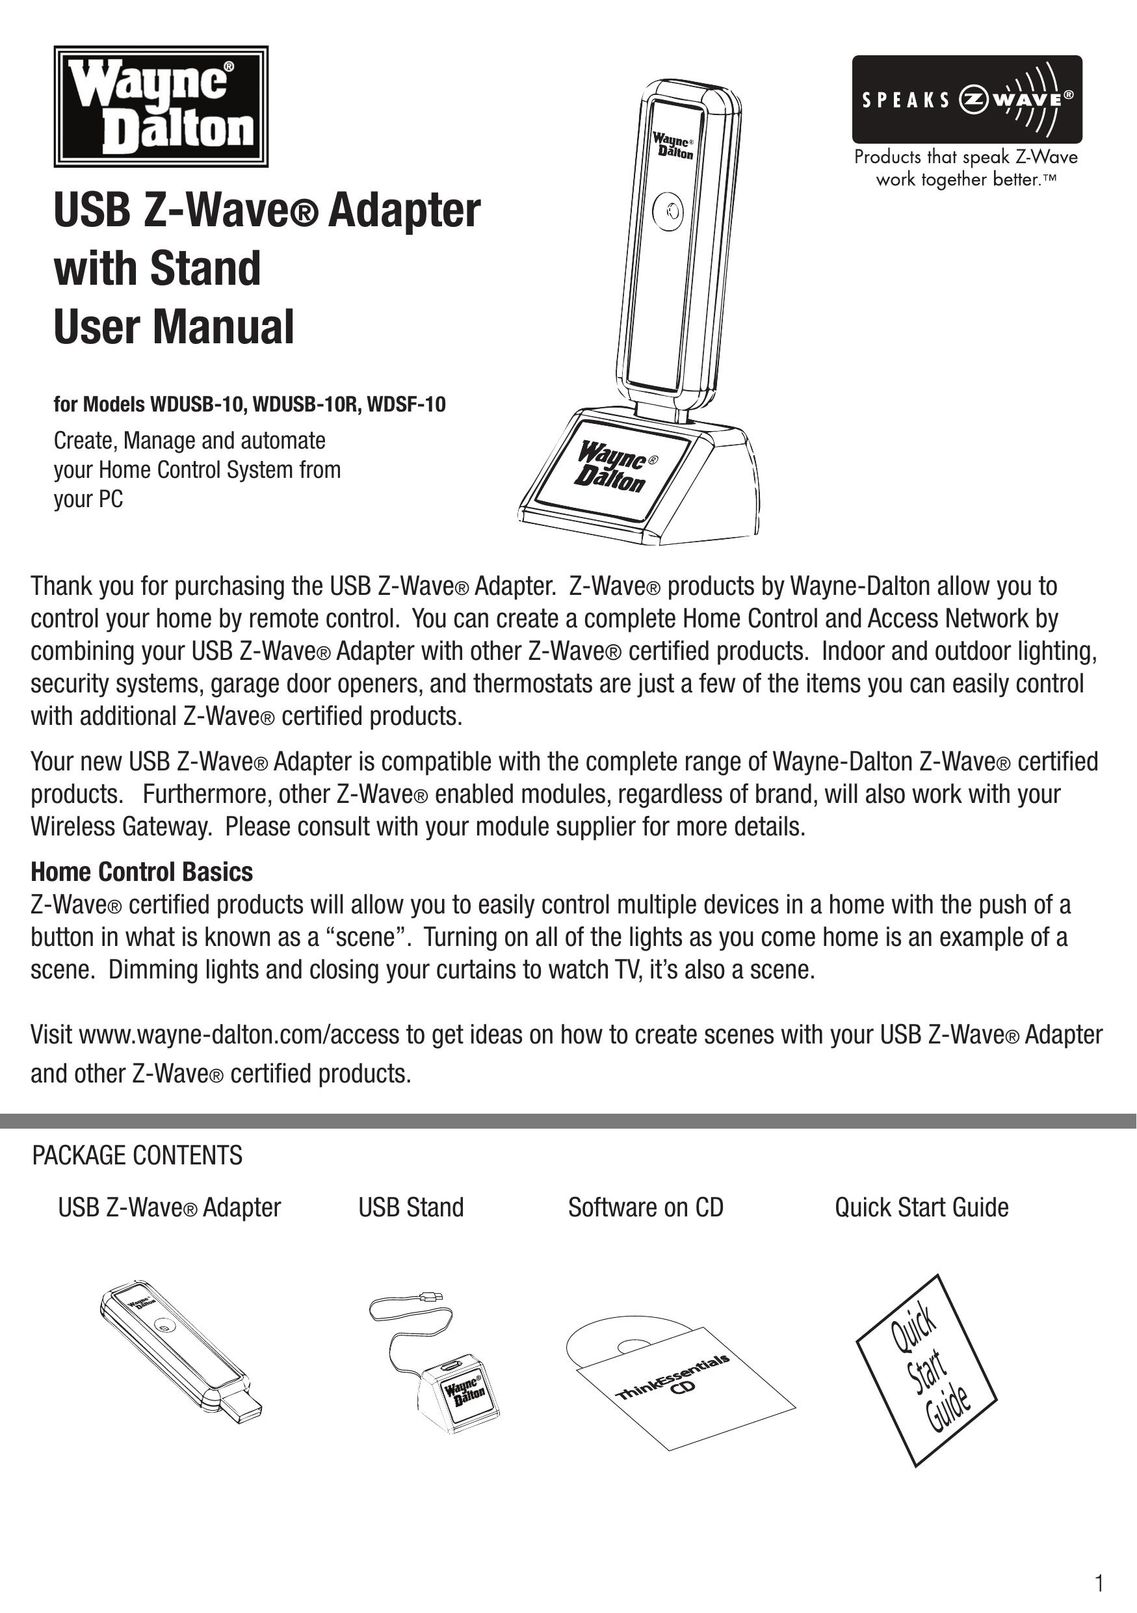 Wayne-Dalton WDSF-10 Network Card User Manual